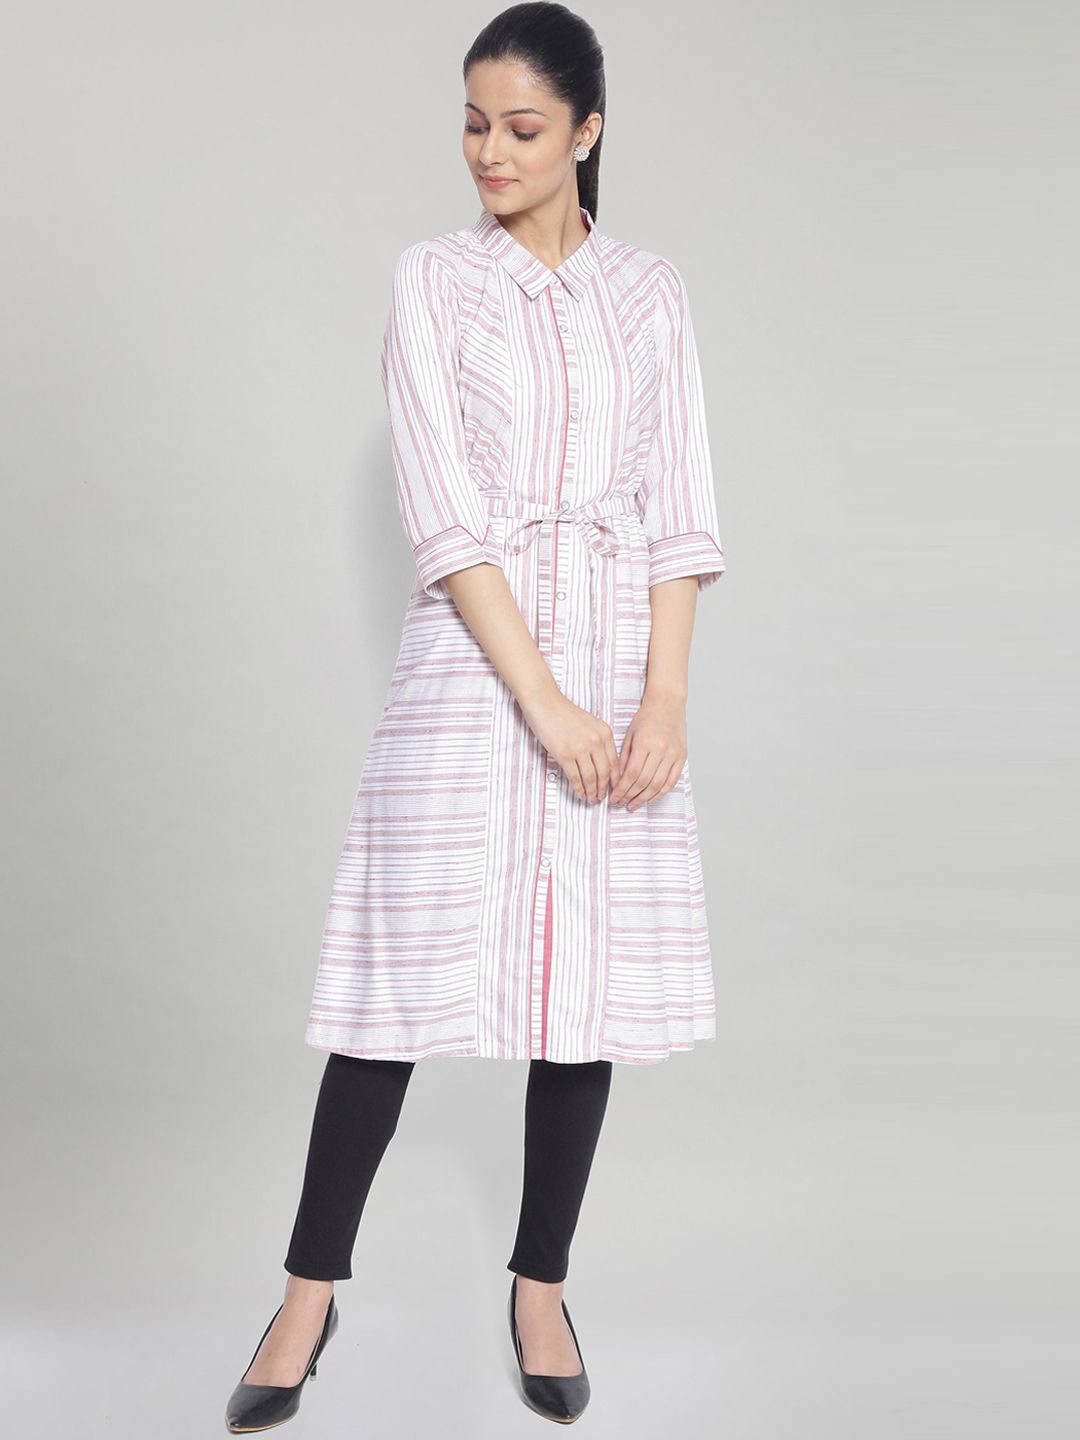 AURELIA White & Pink Striped Shirt Dress With Waist Tie Up Price in India